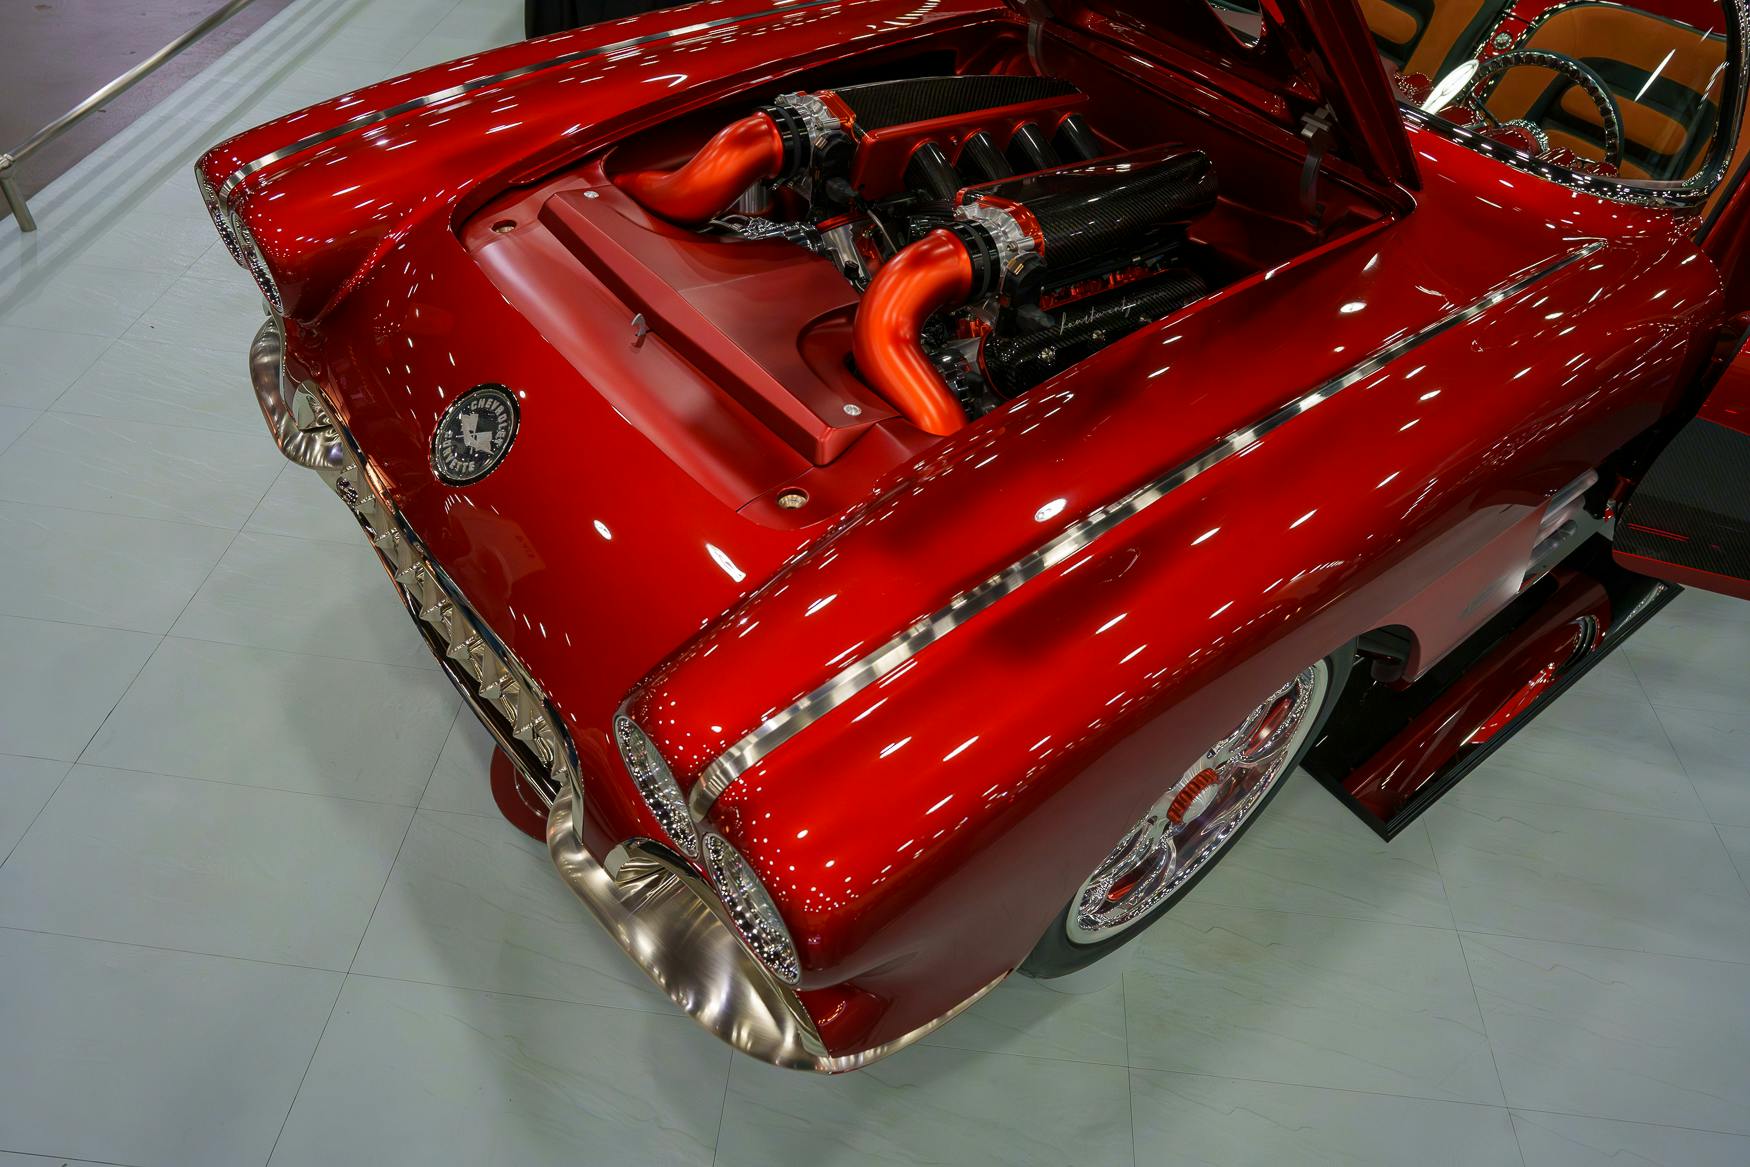 1959 Corvette XS ive engine bay